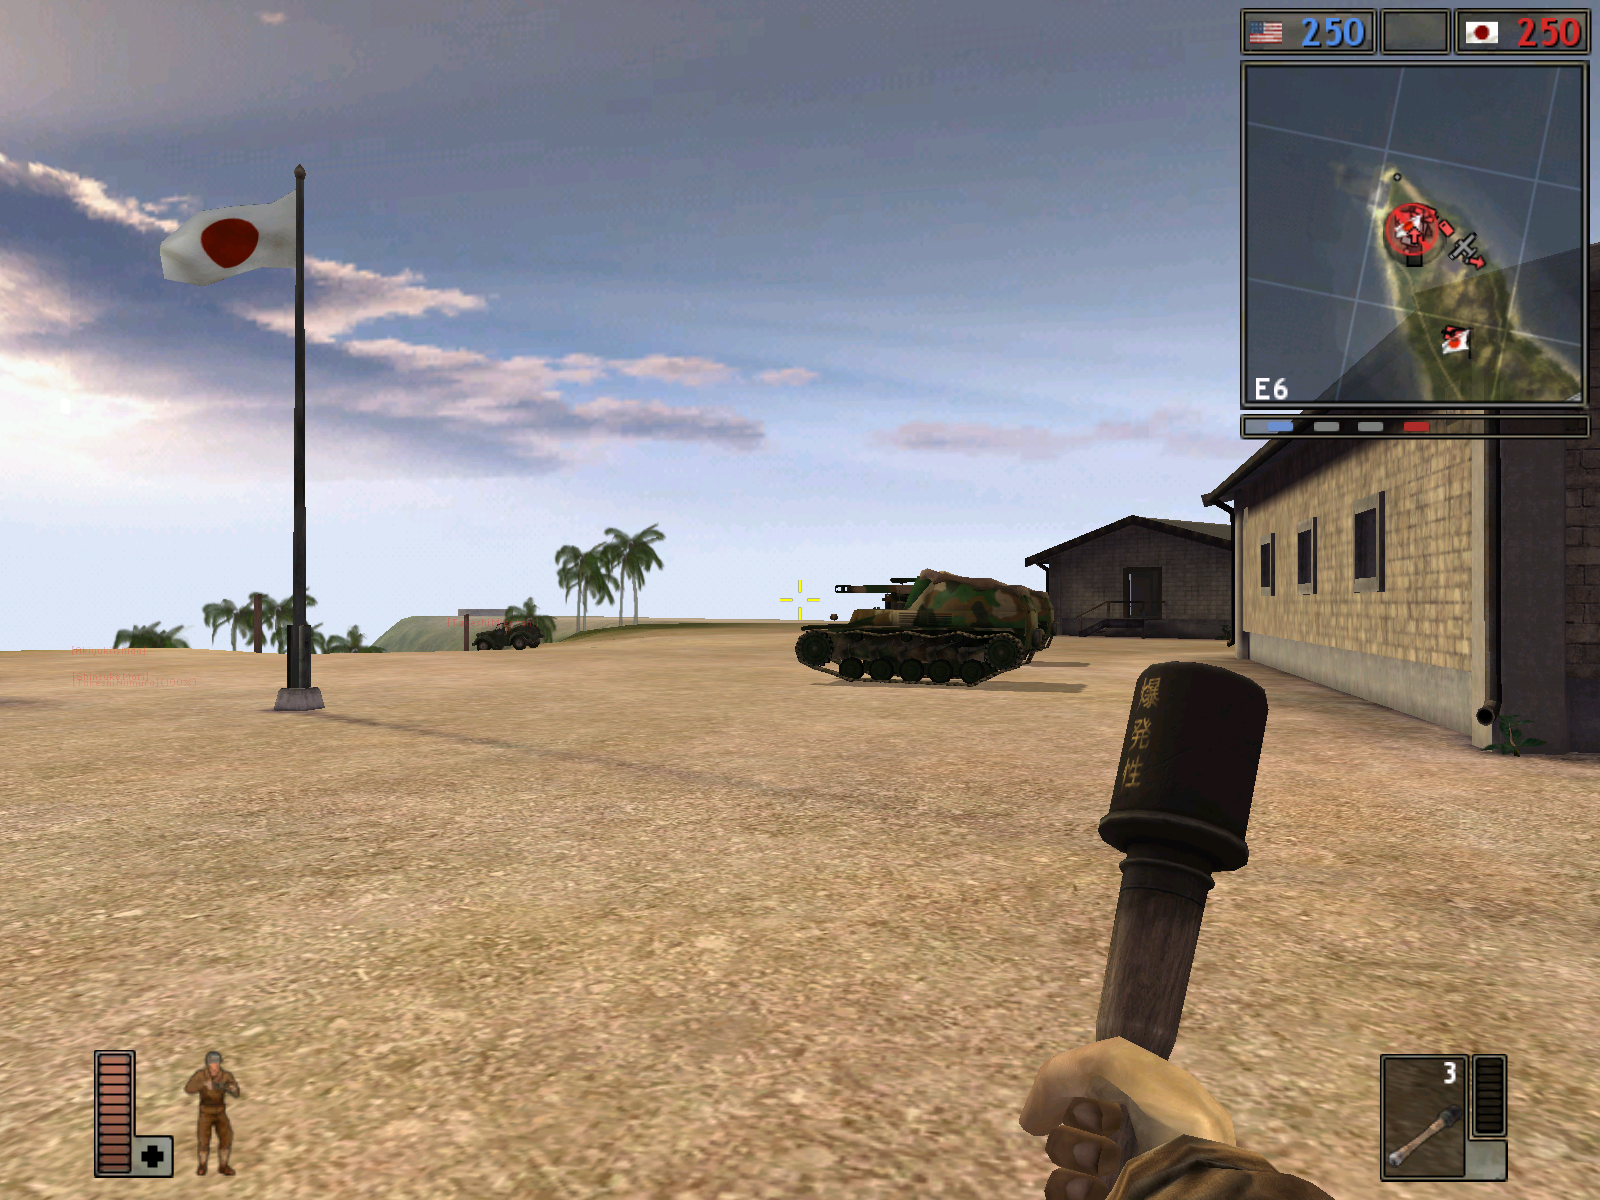 Digital Illusions CE. Battlefield 1942 [PC]. Electronic Arts, 2002, source: http://battlefield.wikia.com/wiki/Hand_grenade